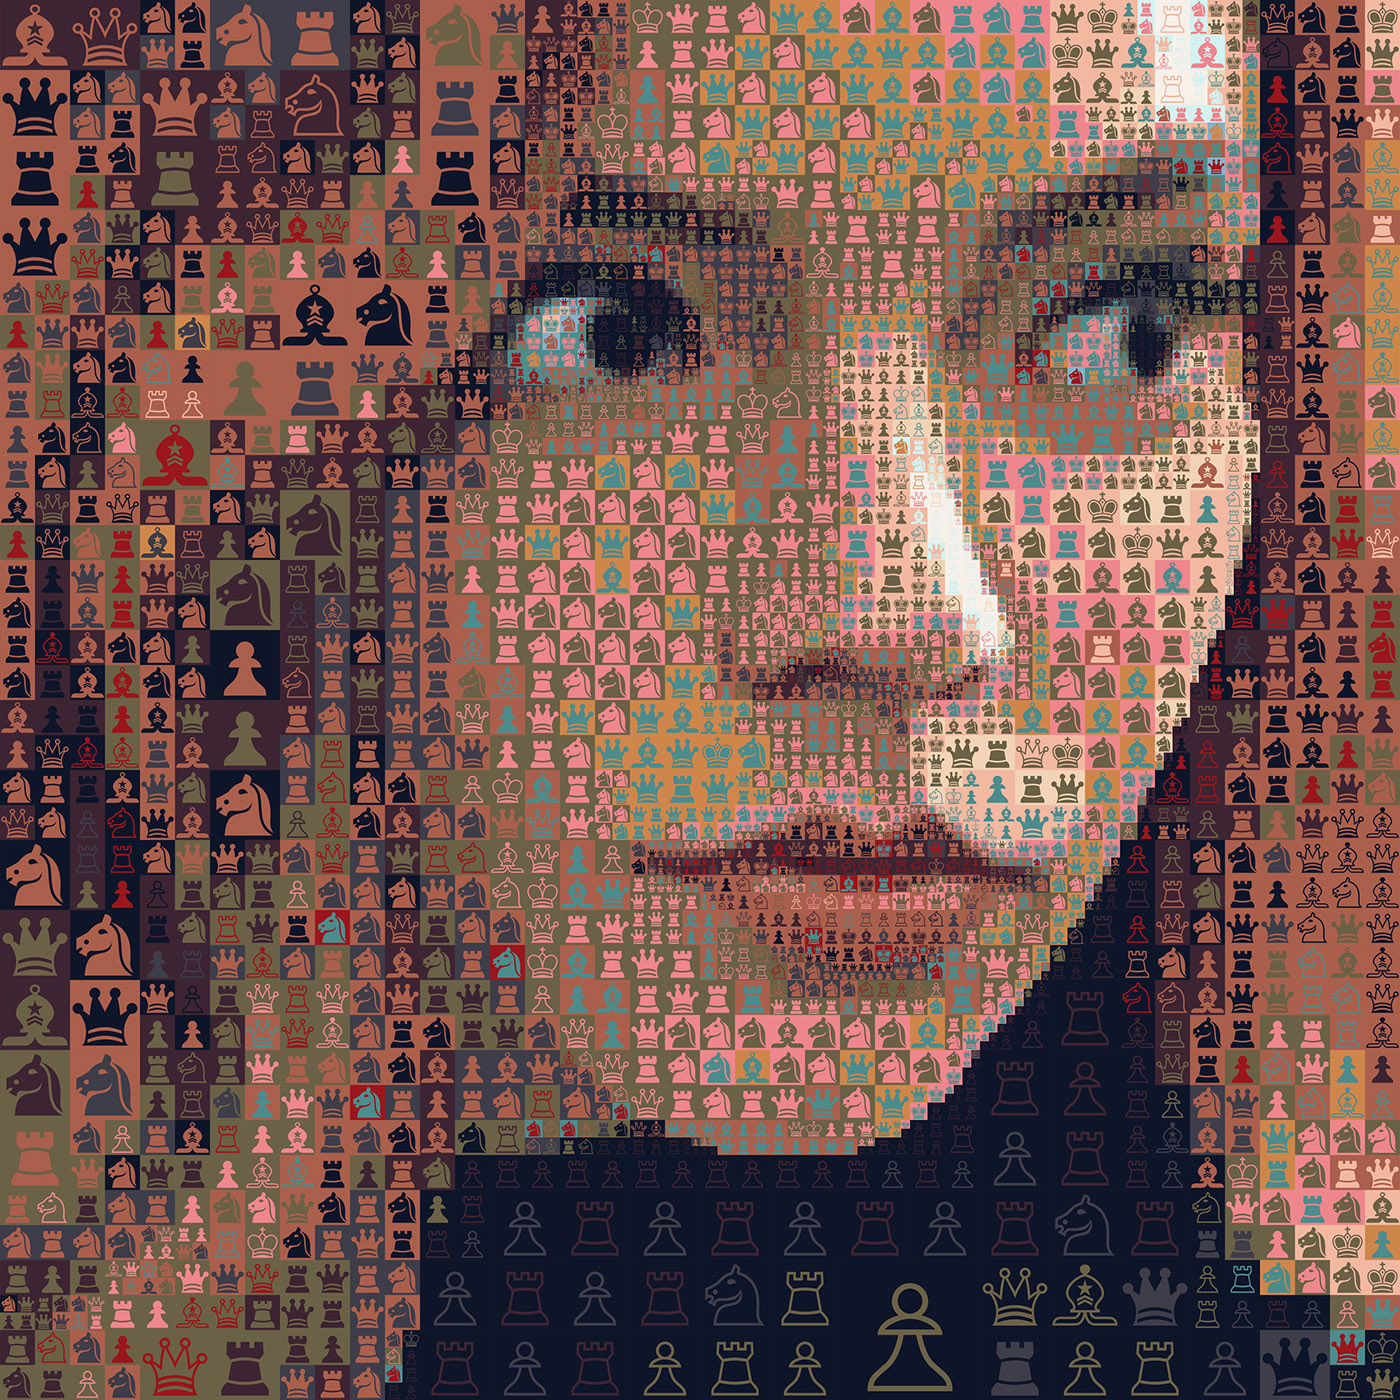 Anya Taylor-Joy chess art life is chess mosaic art mosaic portrait Netflix series photomosaic psychology art The queens gambit visual design